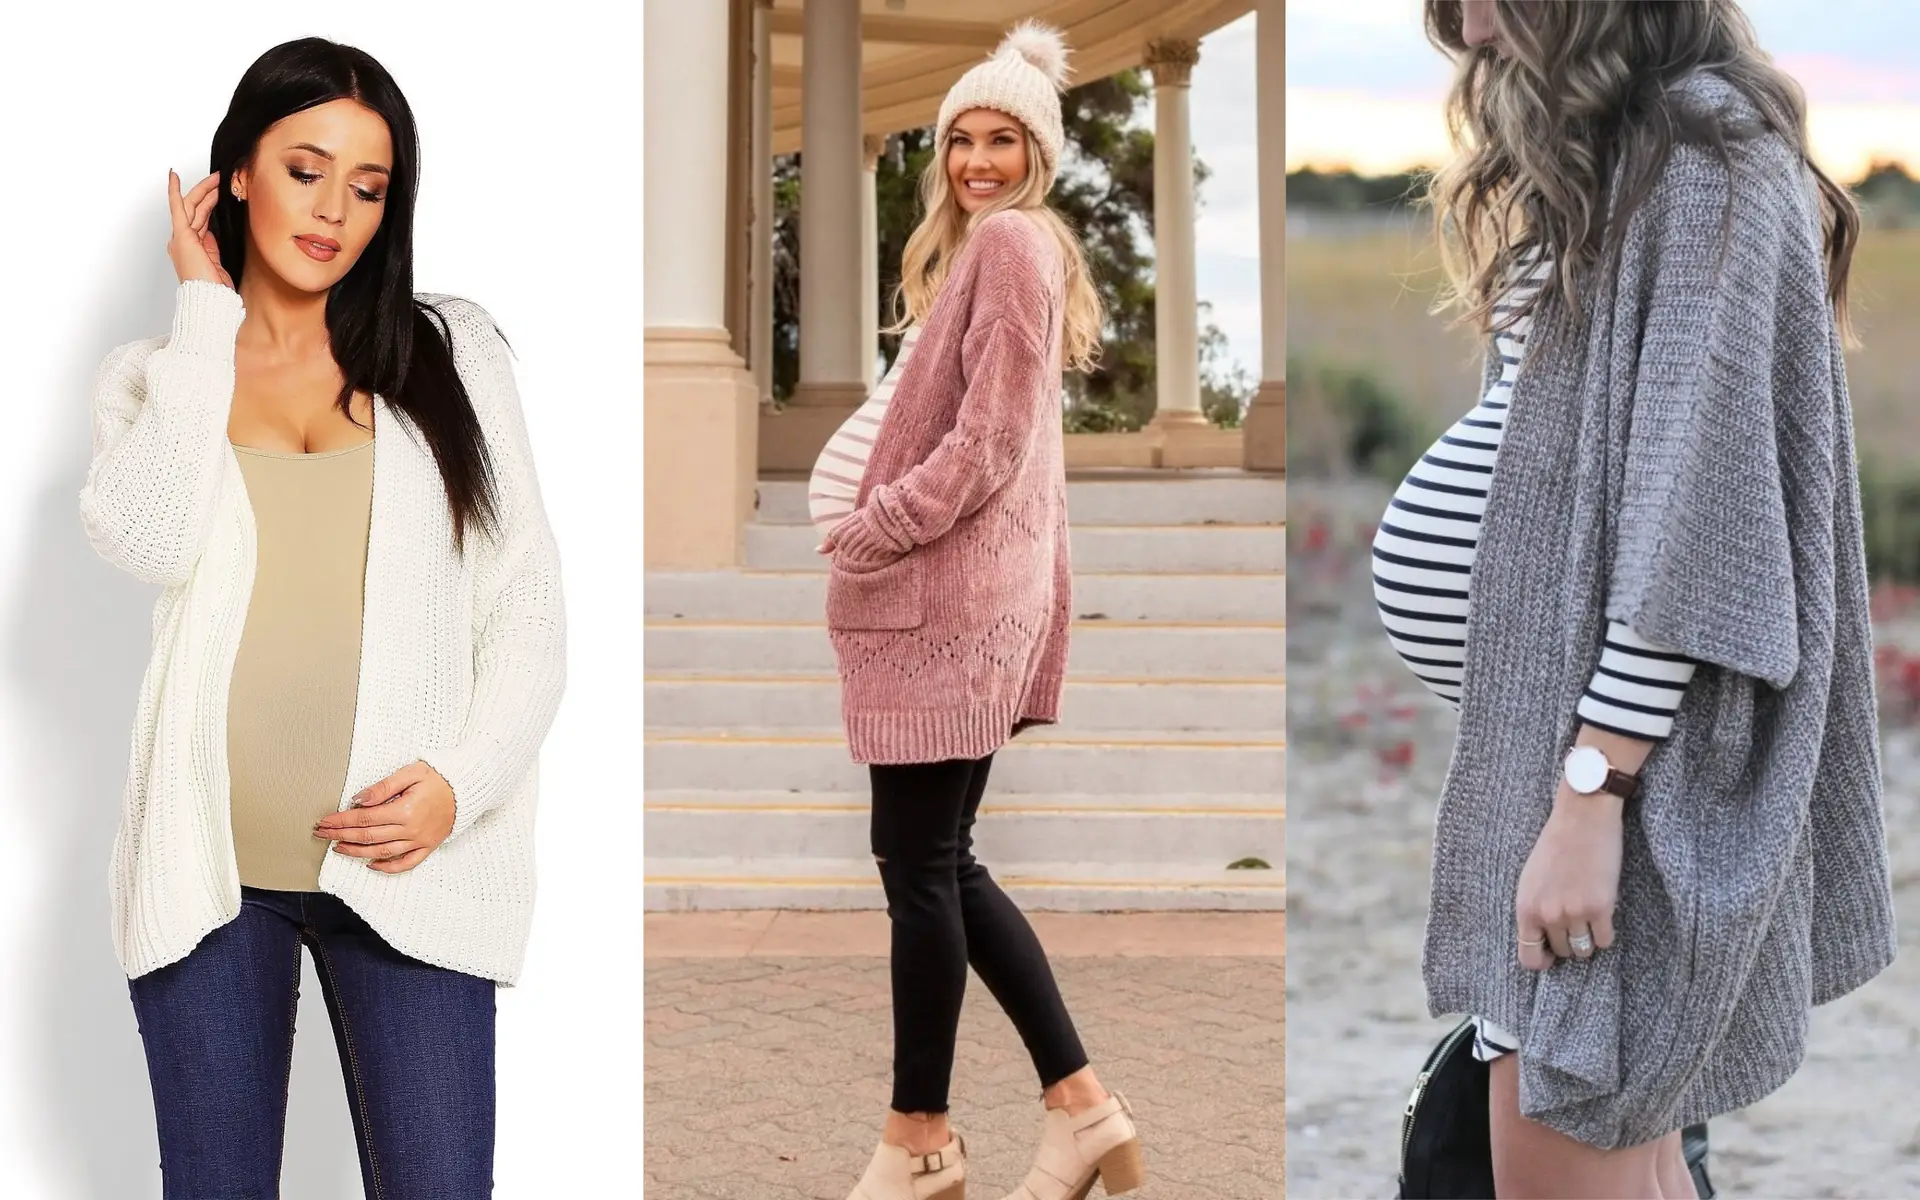 Ropa moderna embarazadas: ¡Tendencias y moda premamá